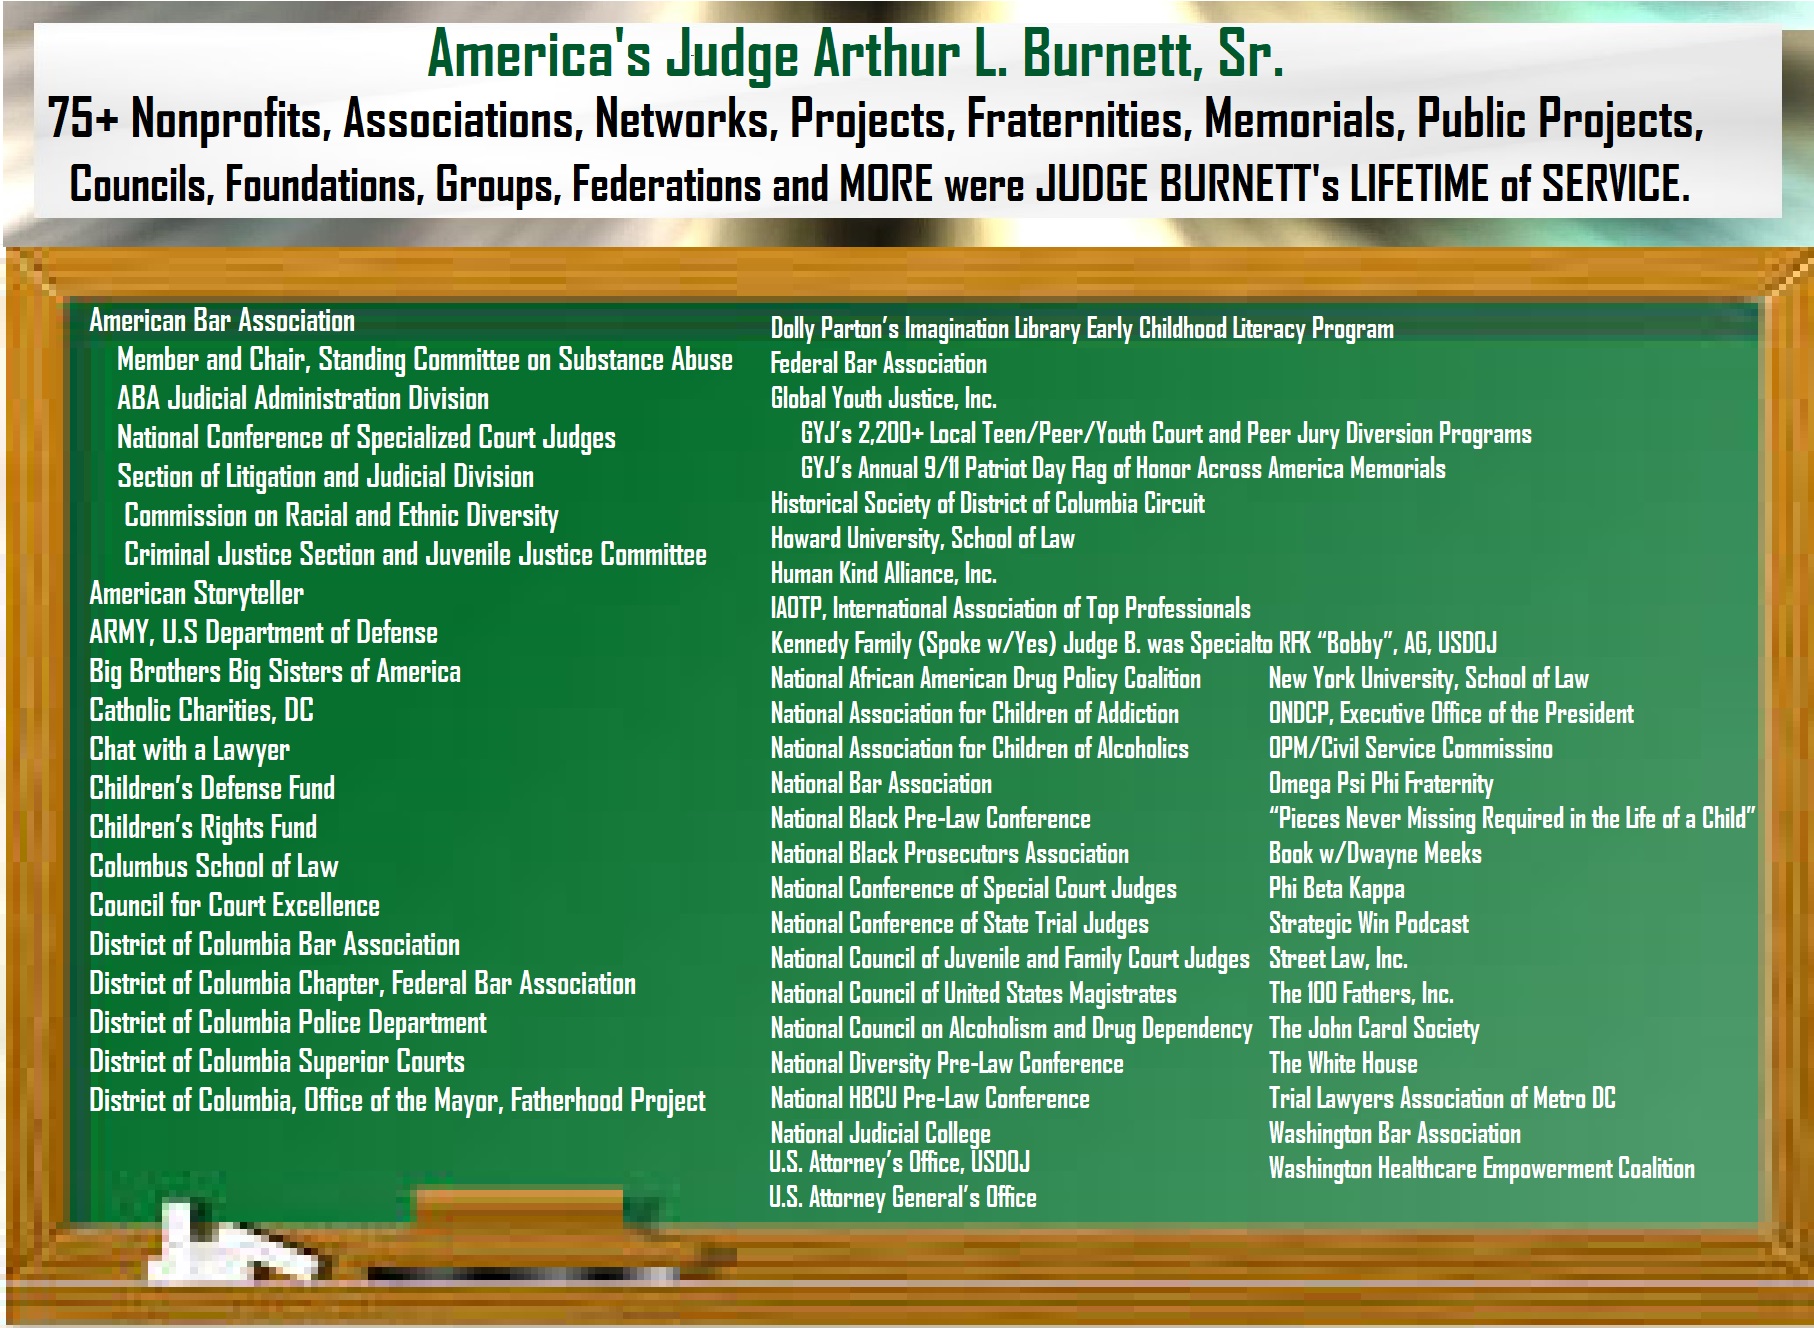 Judge Arthur L. Burnett, Sr. Memorial Page -- Global Youth Justice, Inc.